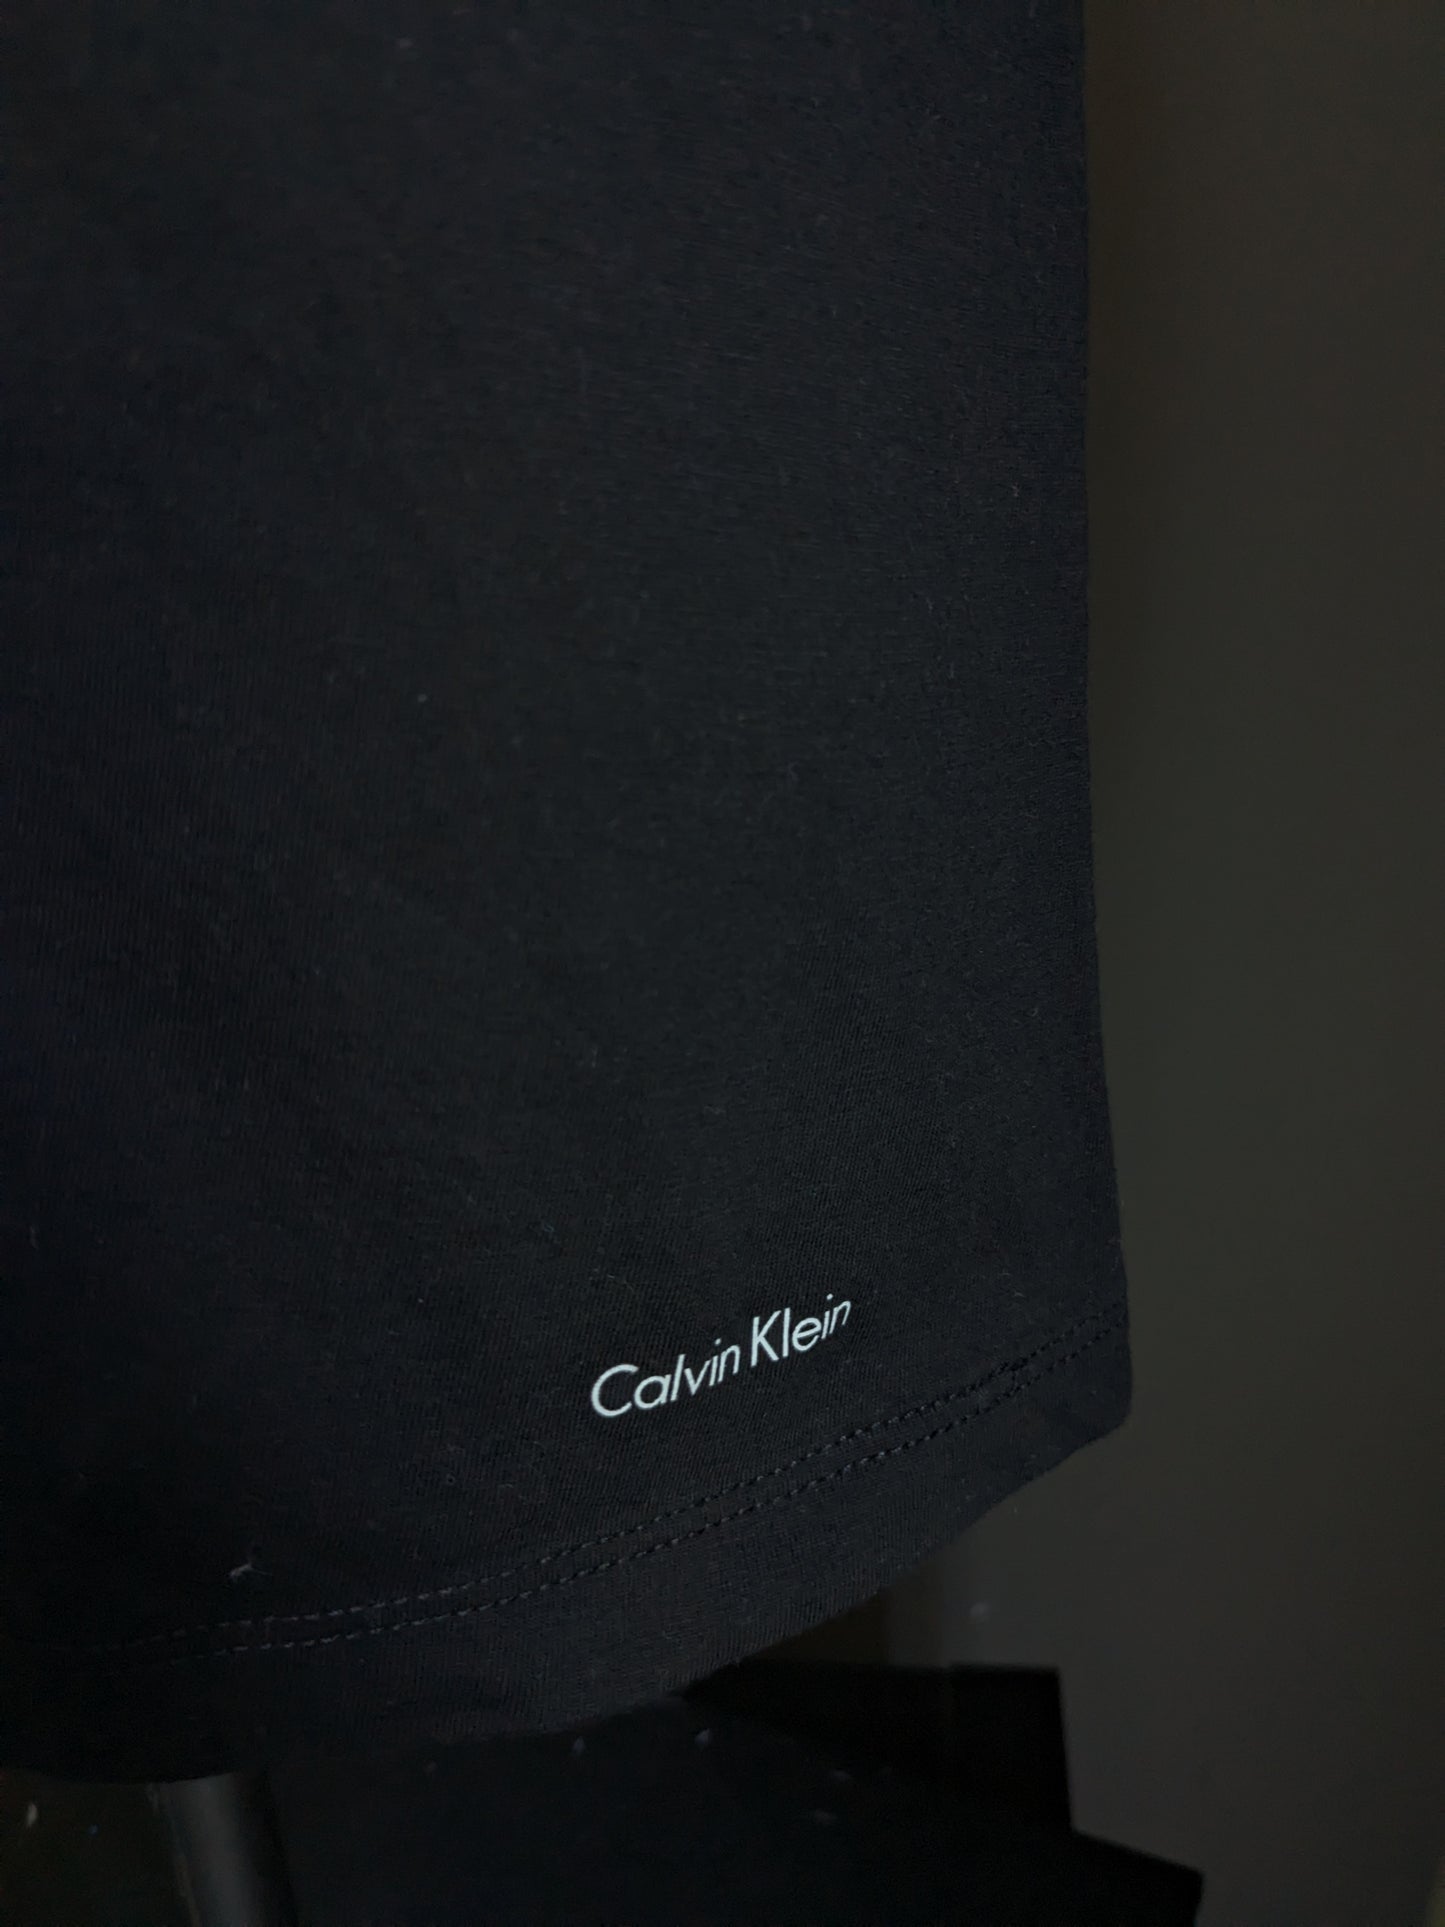 Calvin Klein shirt. Zwart gekleurd. Maat M.